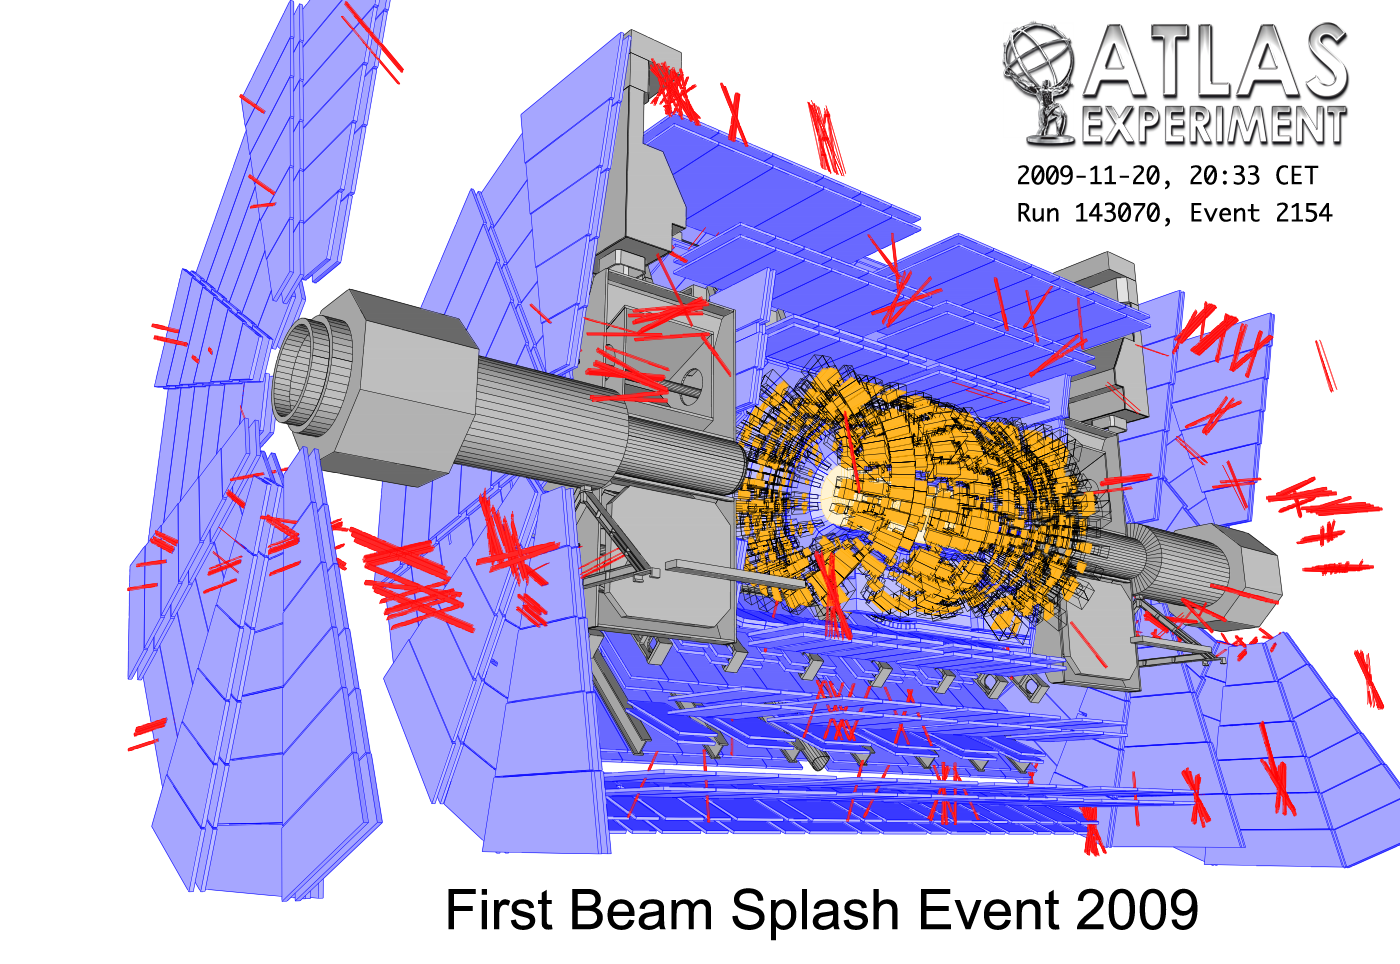 First beam splashes in 2009 in ATLAS